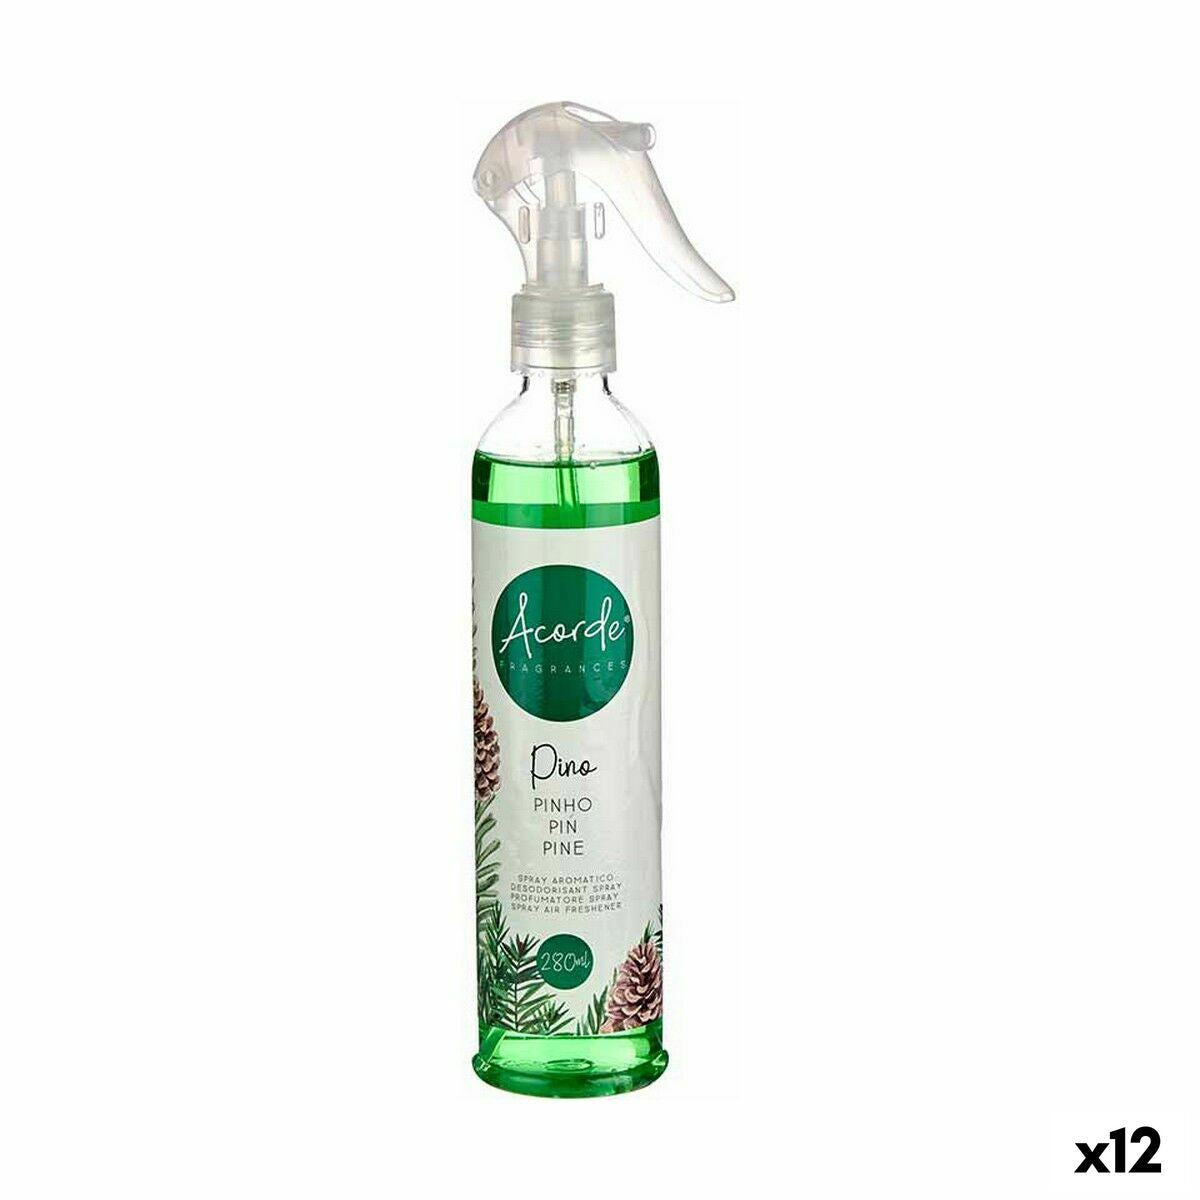 Air freshener spray Pine 280 ml (12 parts)